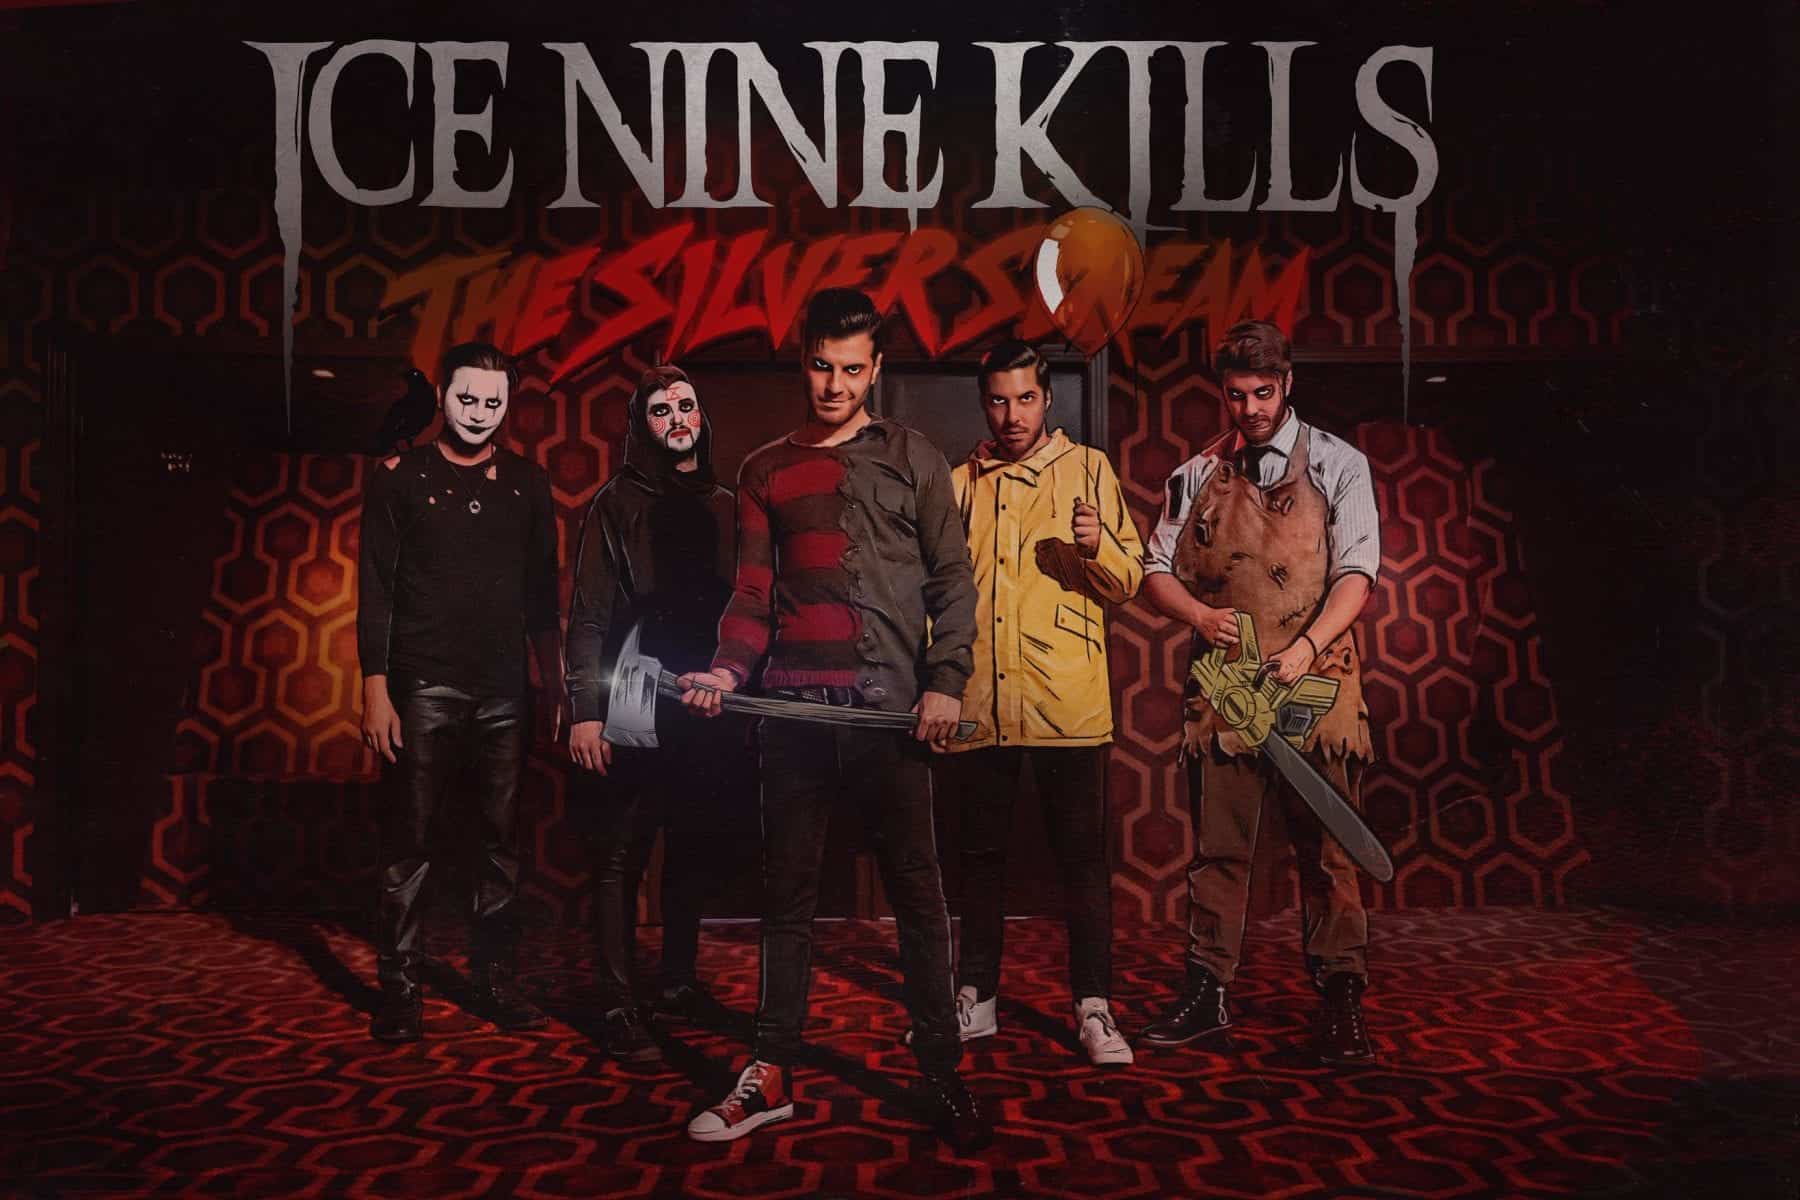 Album Review Ice Nine Kills The Silver Scream (Final Cut) (Fearless